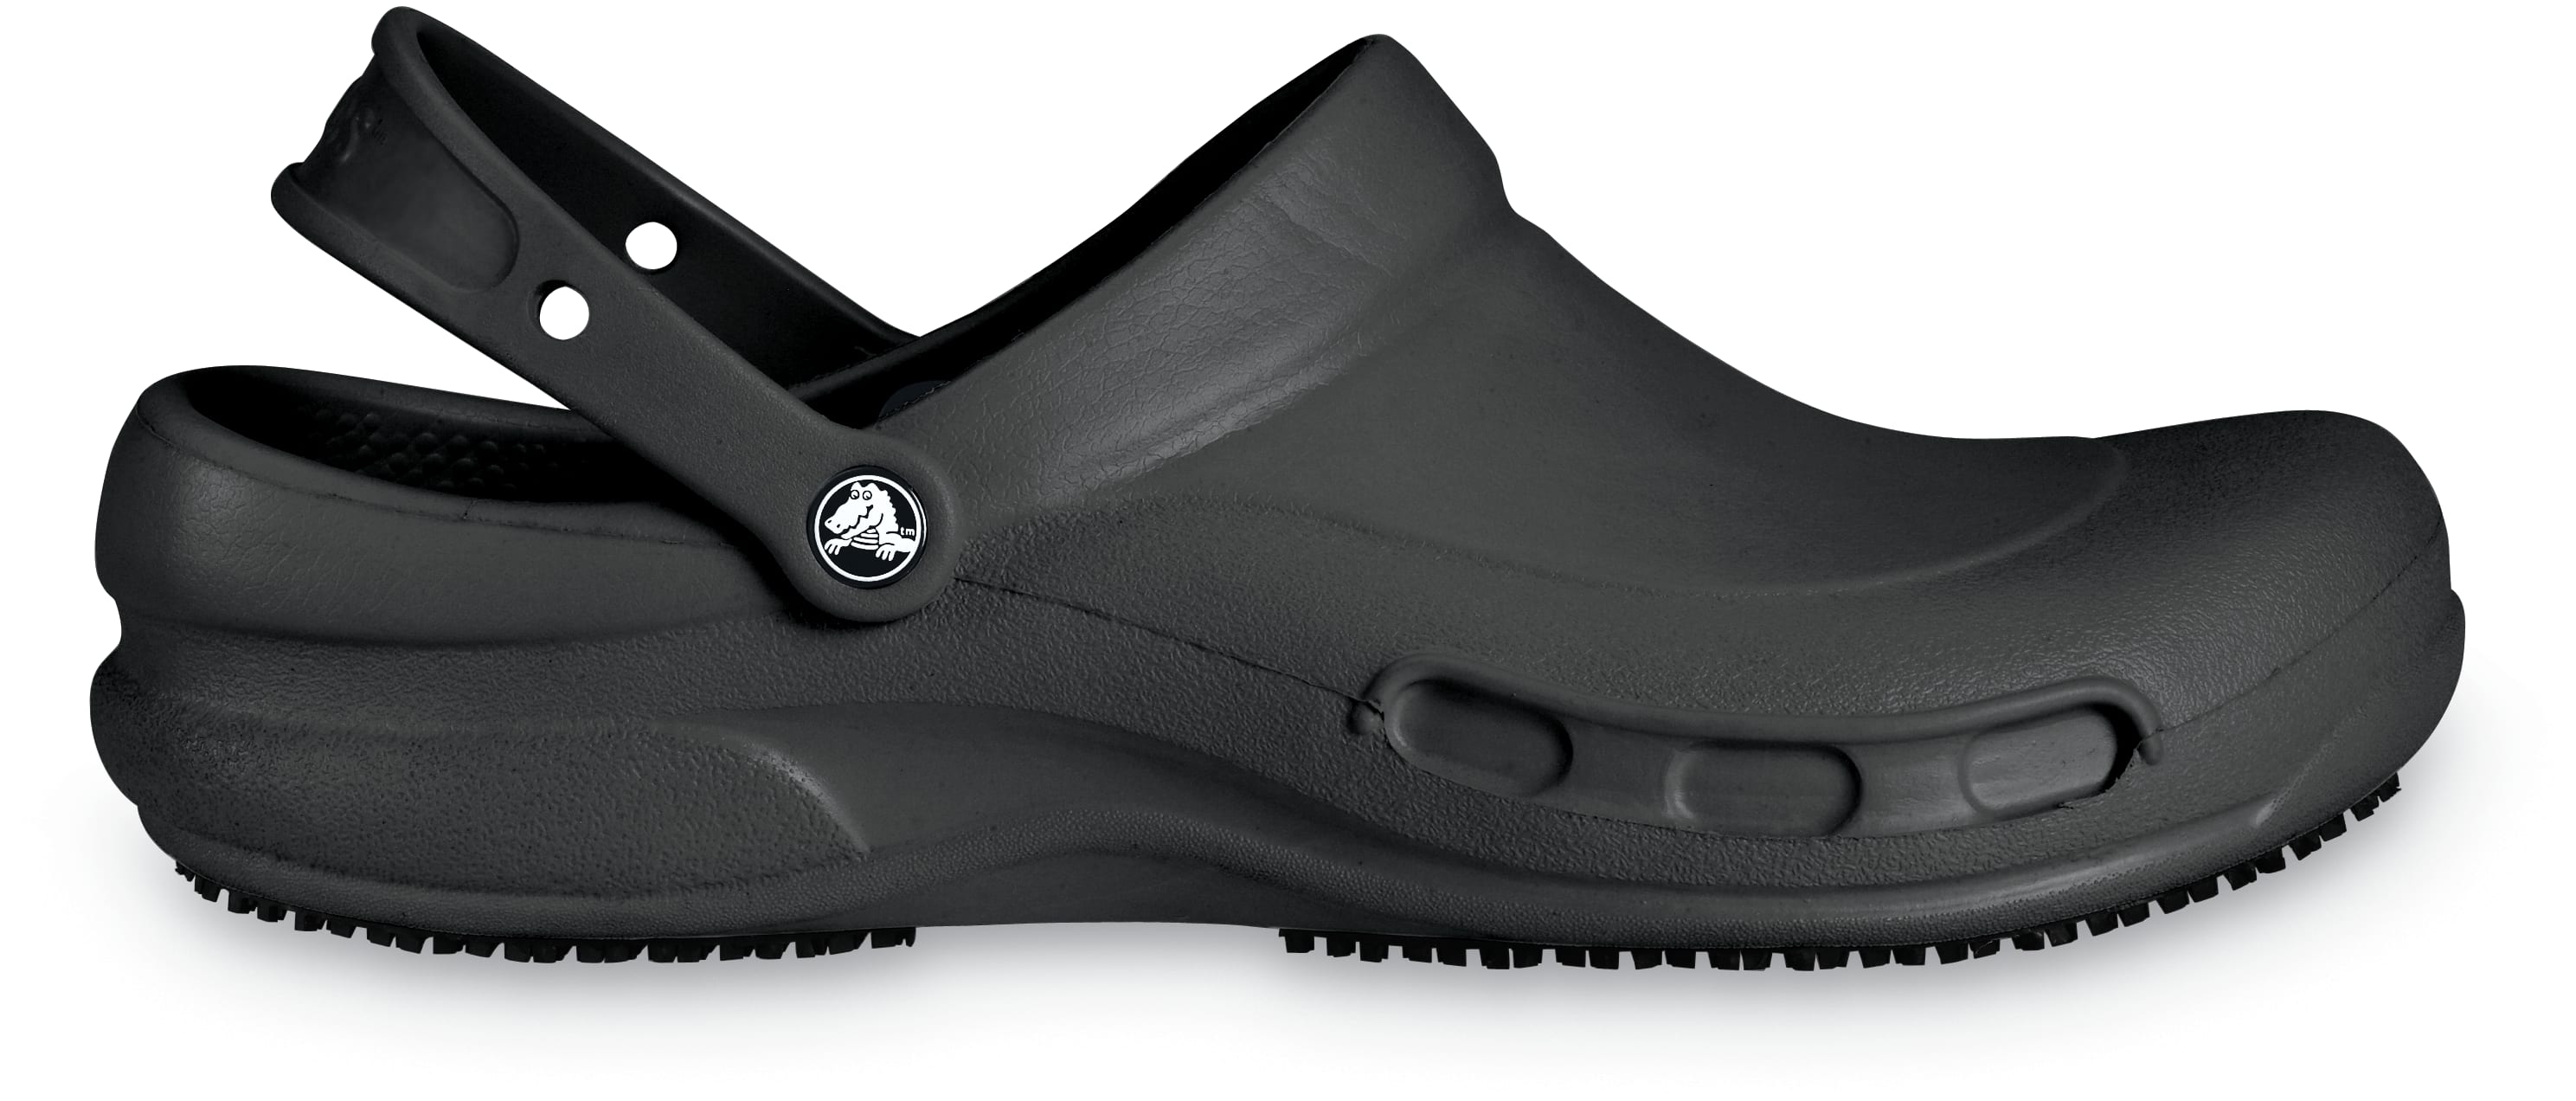 Crocs | Unisex | Bistro Slip Resistant Work | Clogs | Black | W8/M7